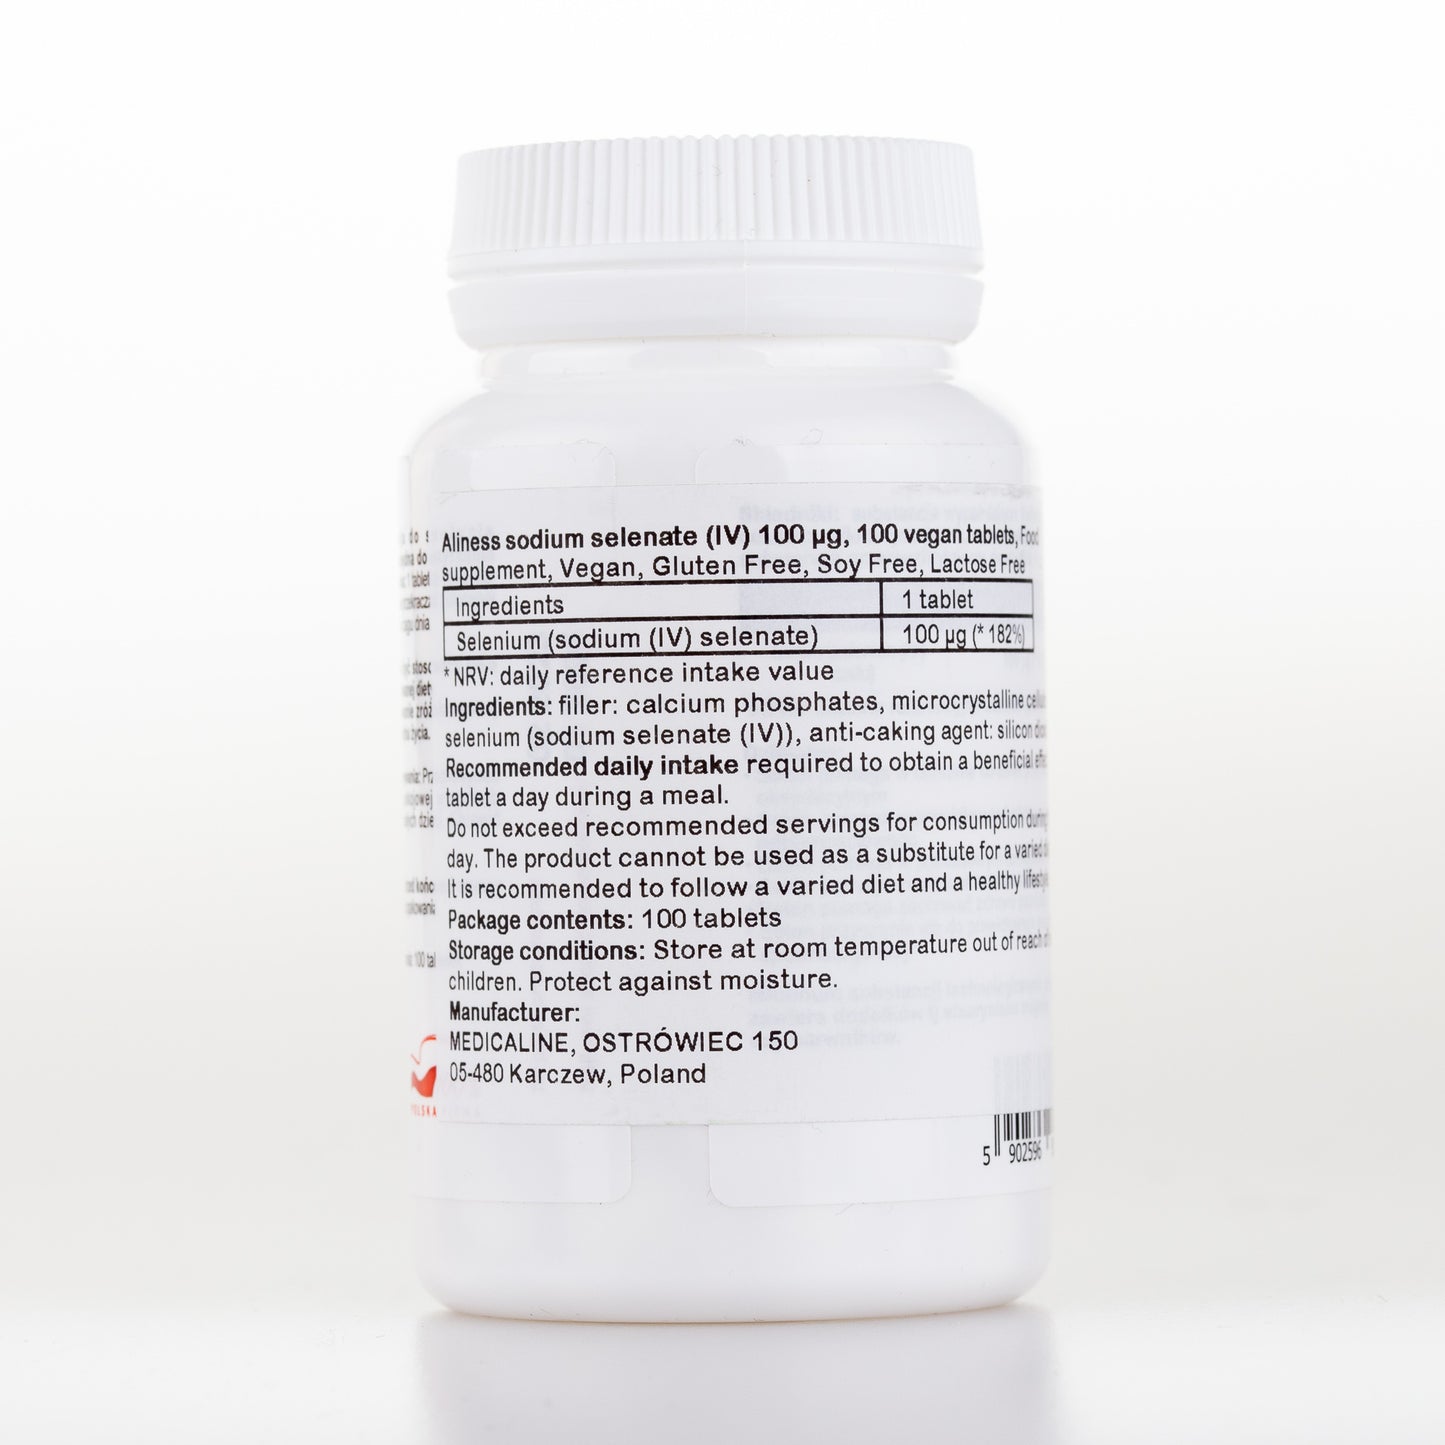 Selenium, sodium selenate (IV), 100 vegan tablets